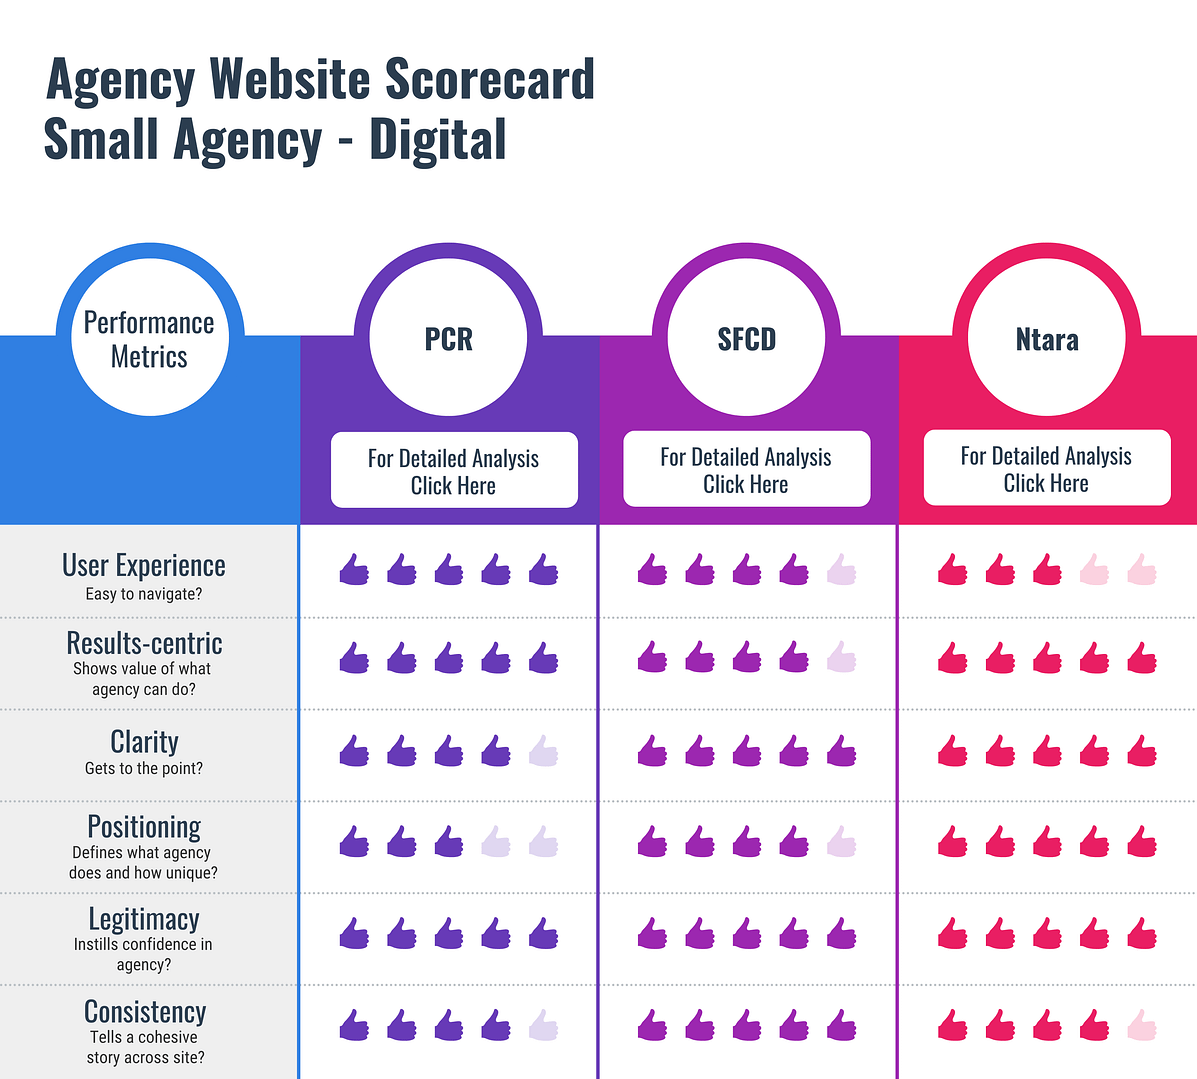 Agency Website Scorecard - Small Agency Digital